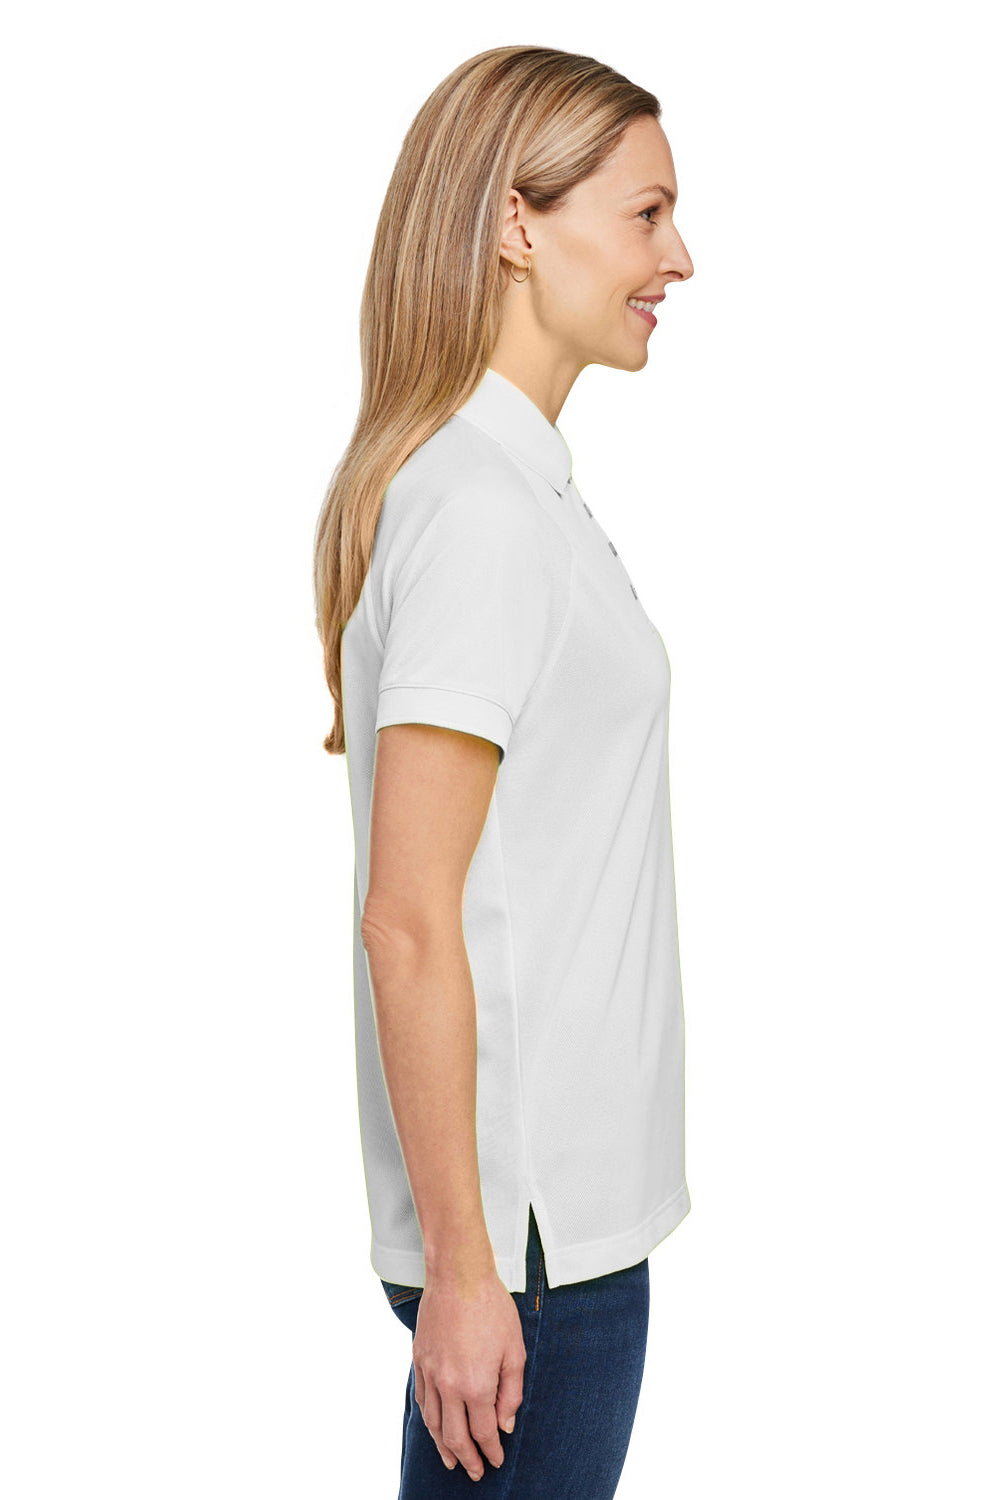 Harriton M208W Womens Charge Moisture Wicking Short Sleeve Polo Shirt White Side